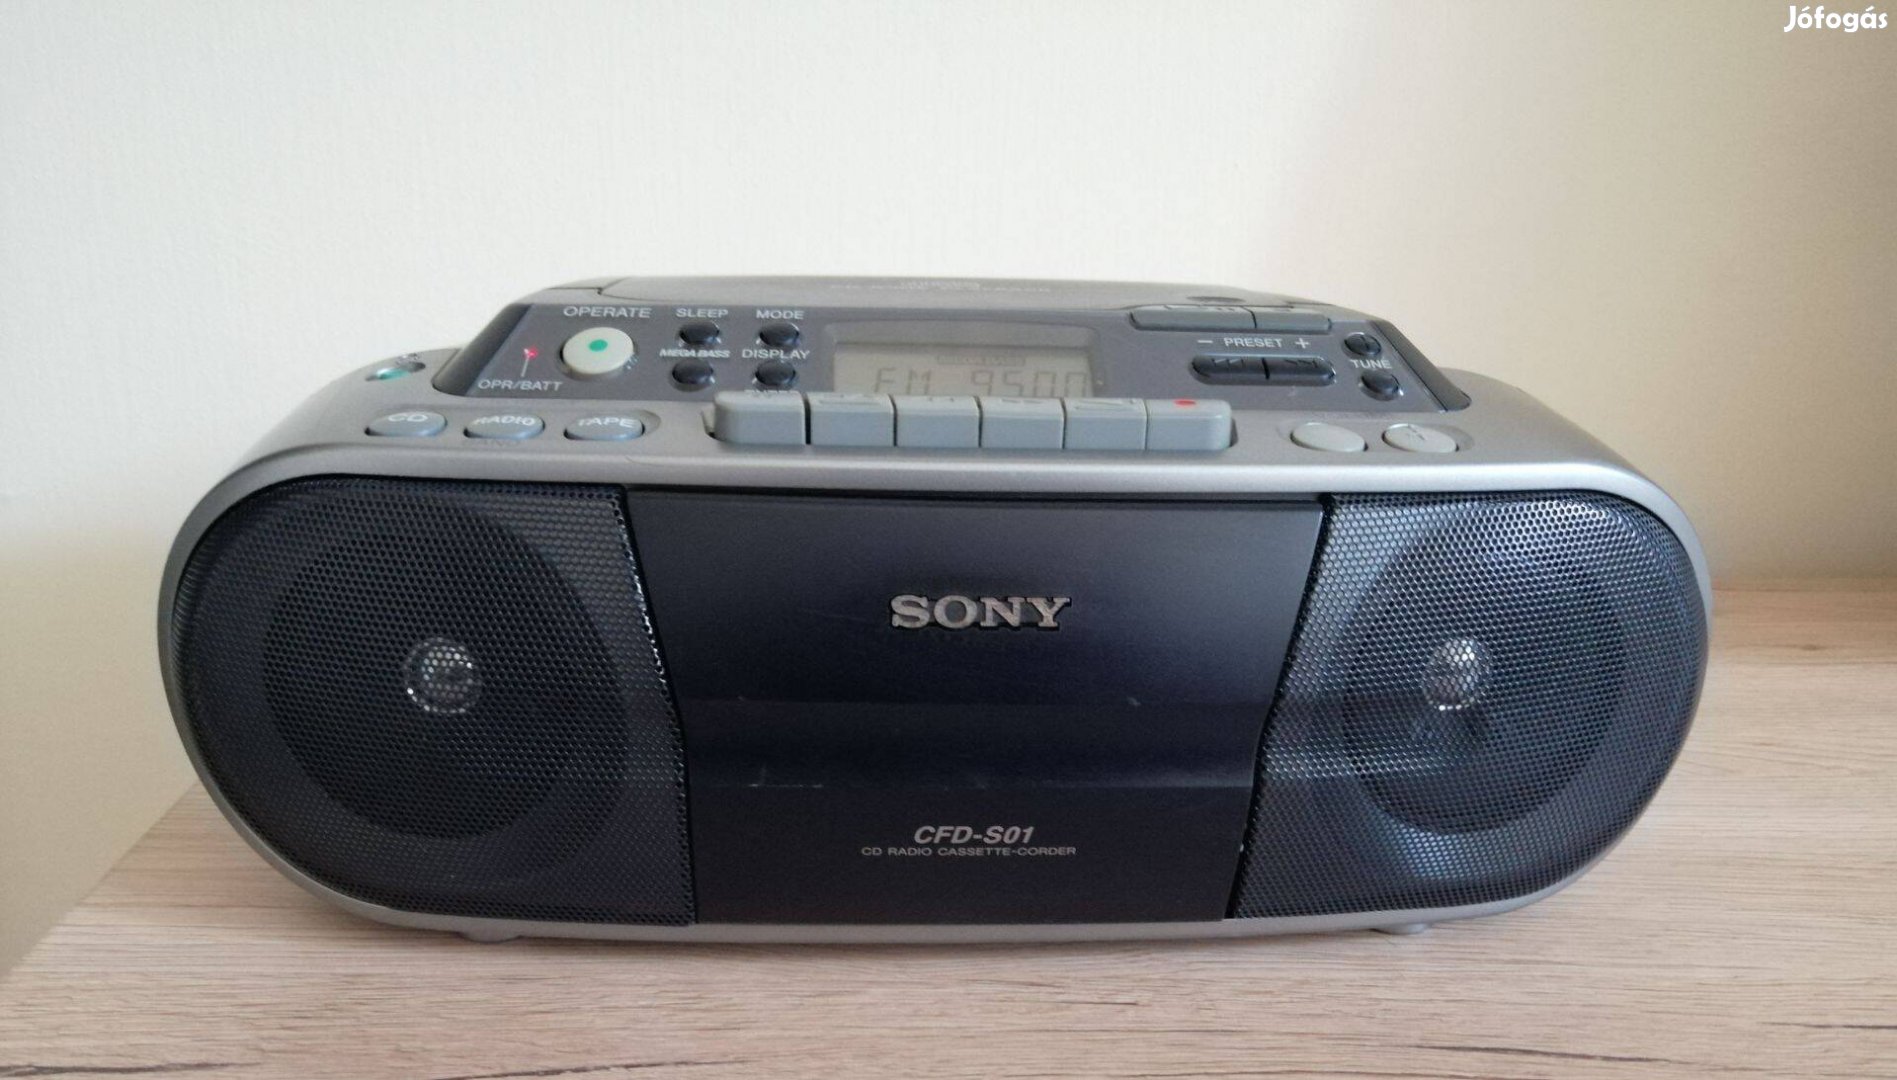 Sony CD-s kazettás rádiós magnó